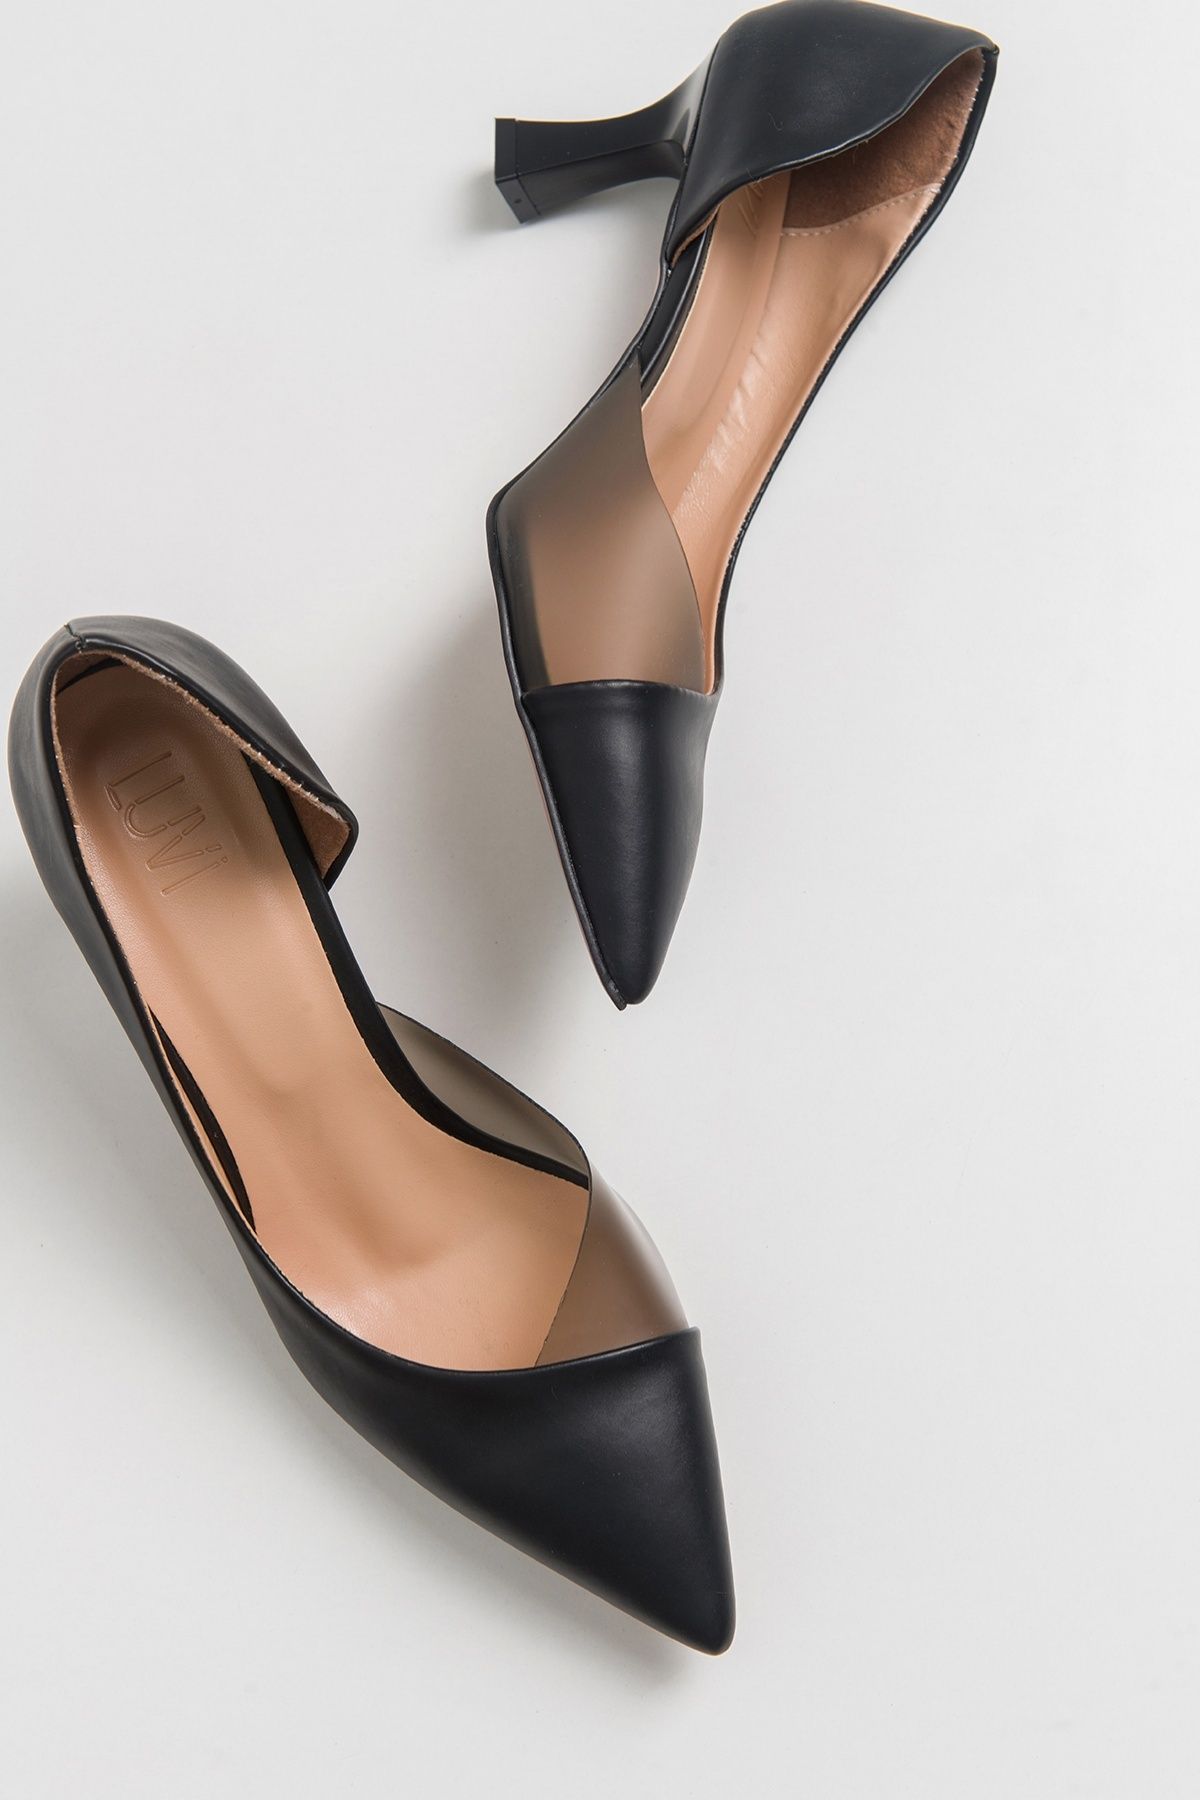 luvishoes 353 Siyah Cilt Topuklu Kadın Ayakkabı